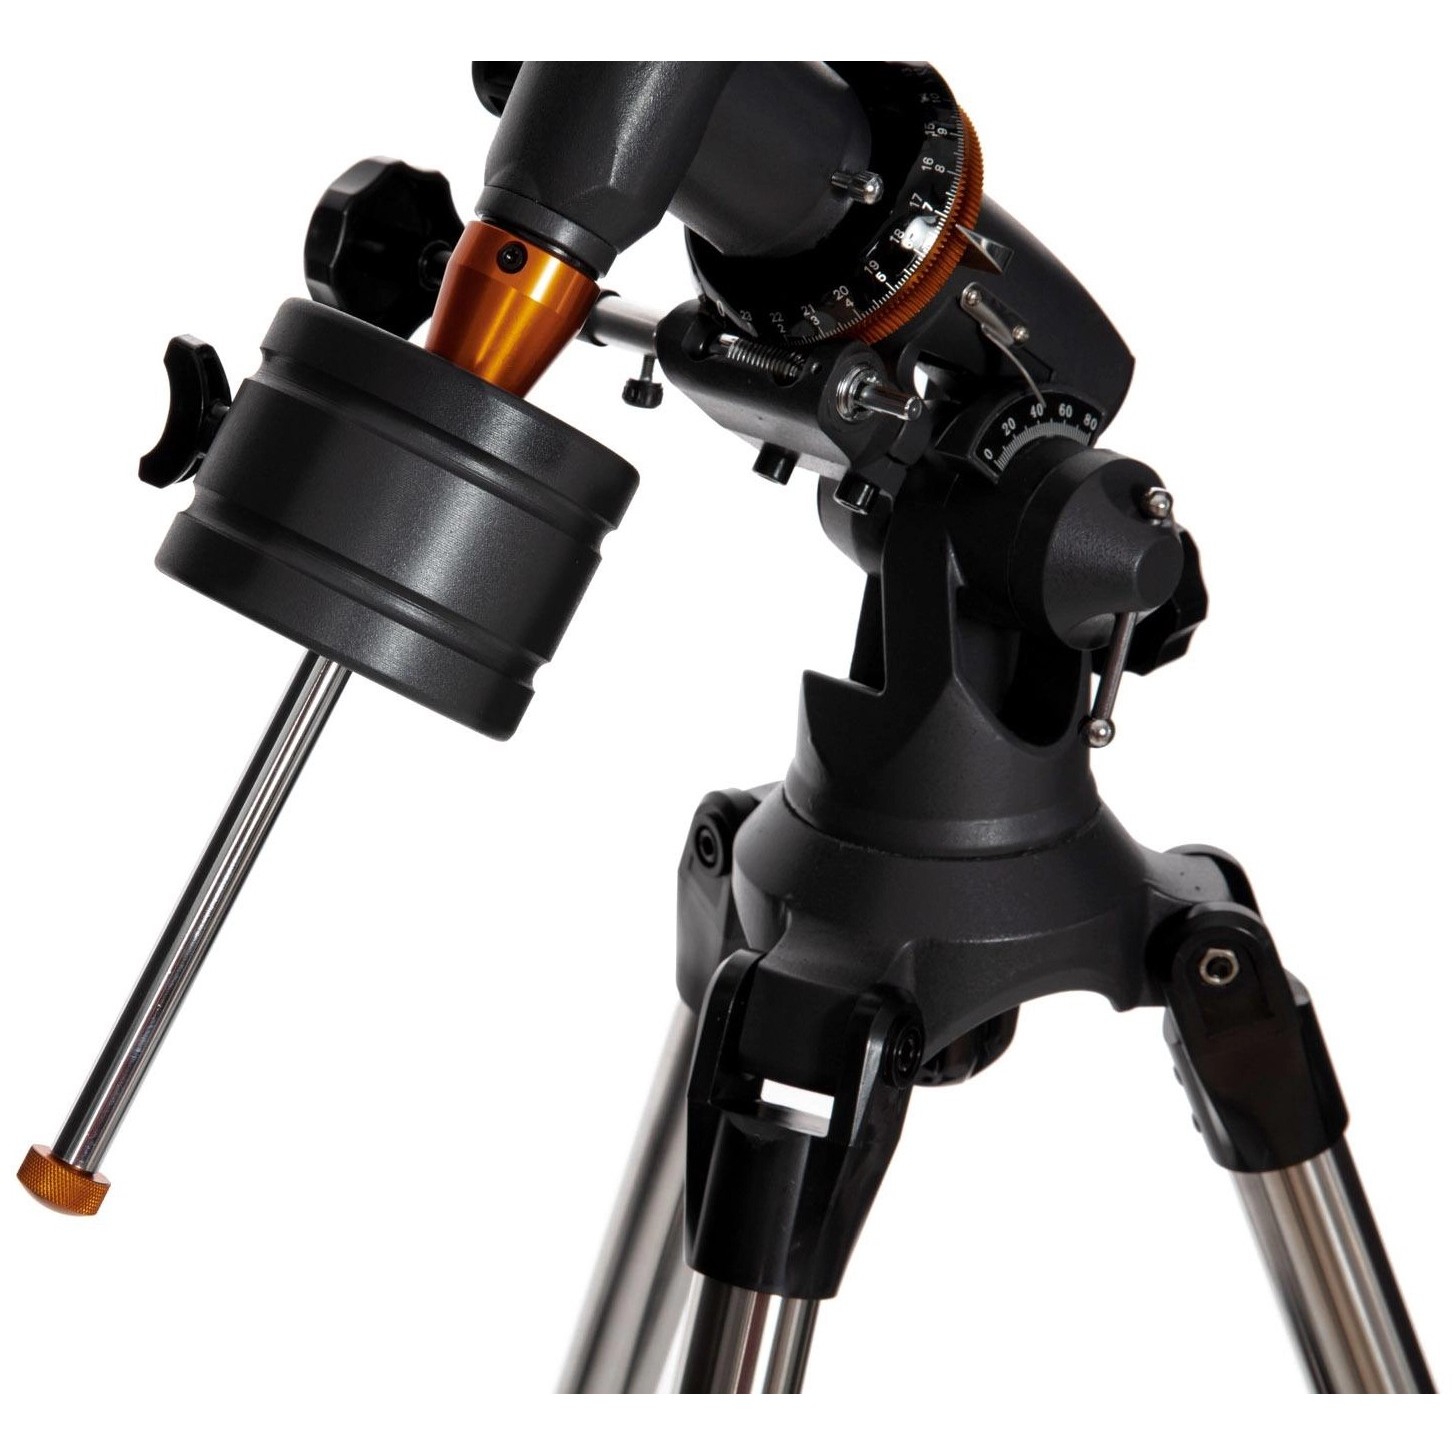 Телескопы OPTICON Constellation 80F900EQ